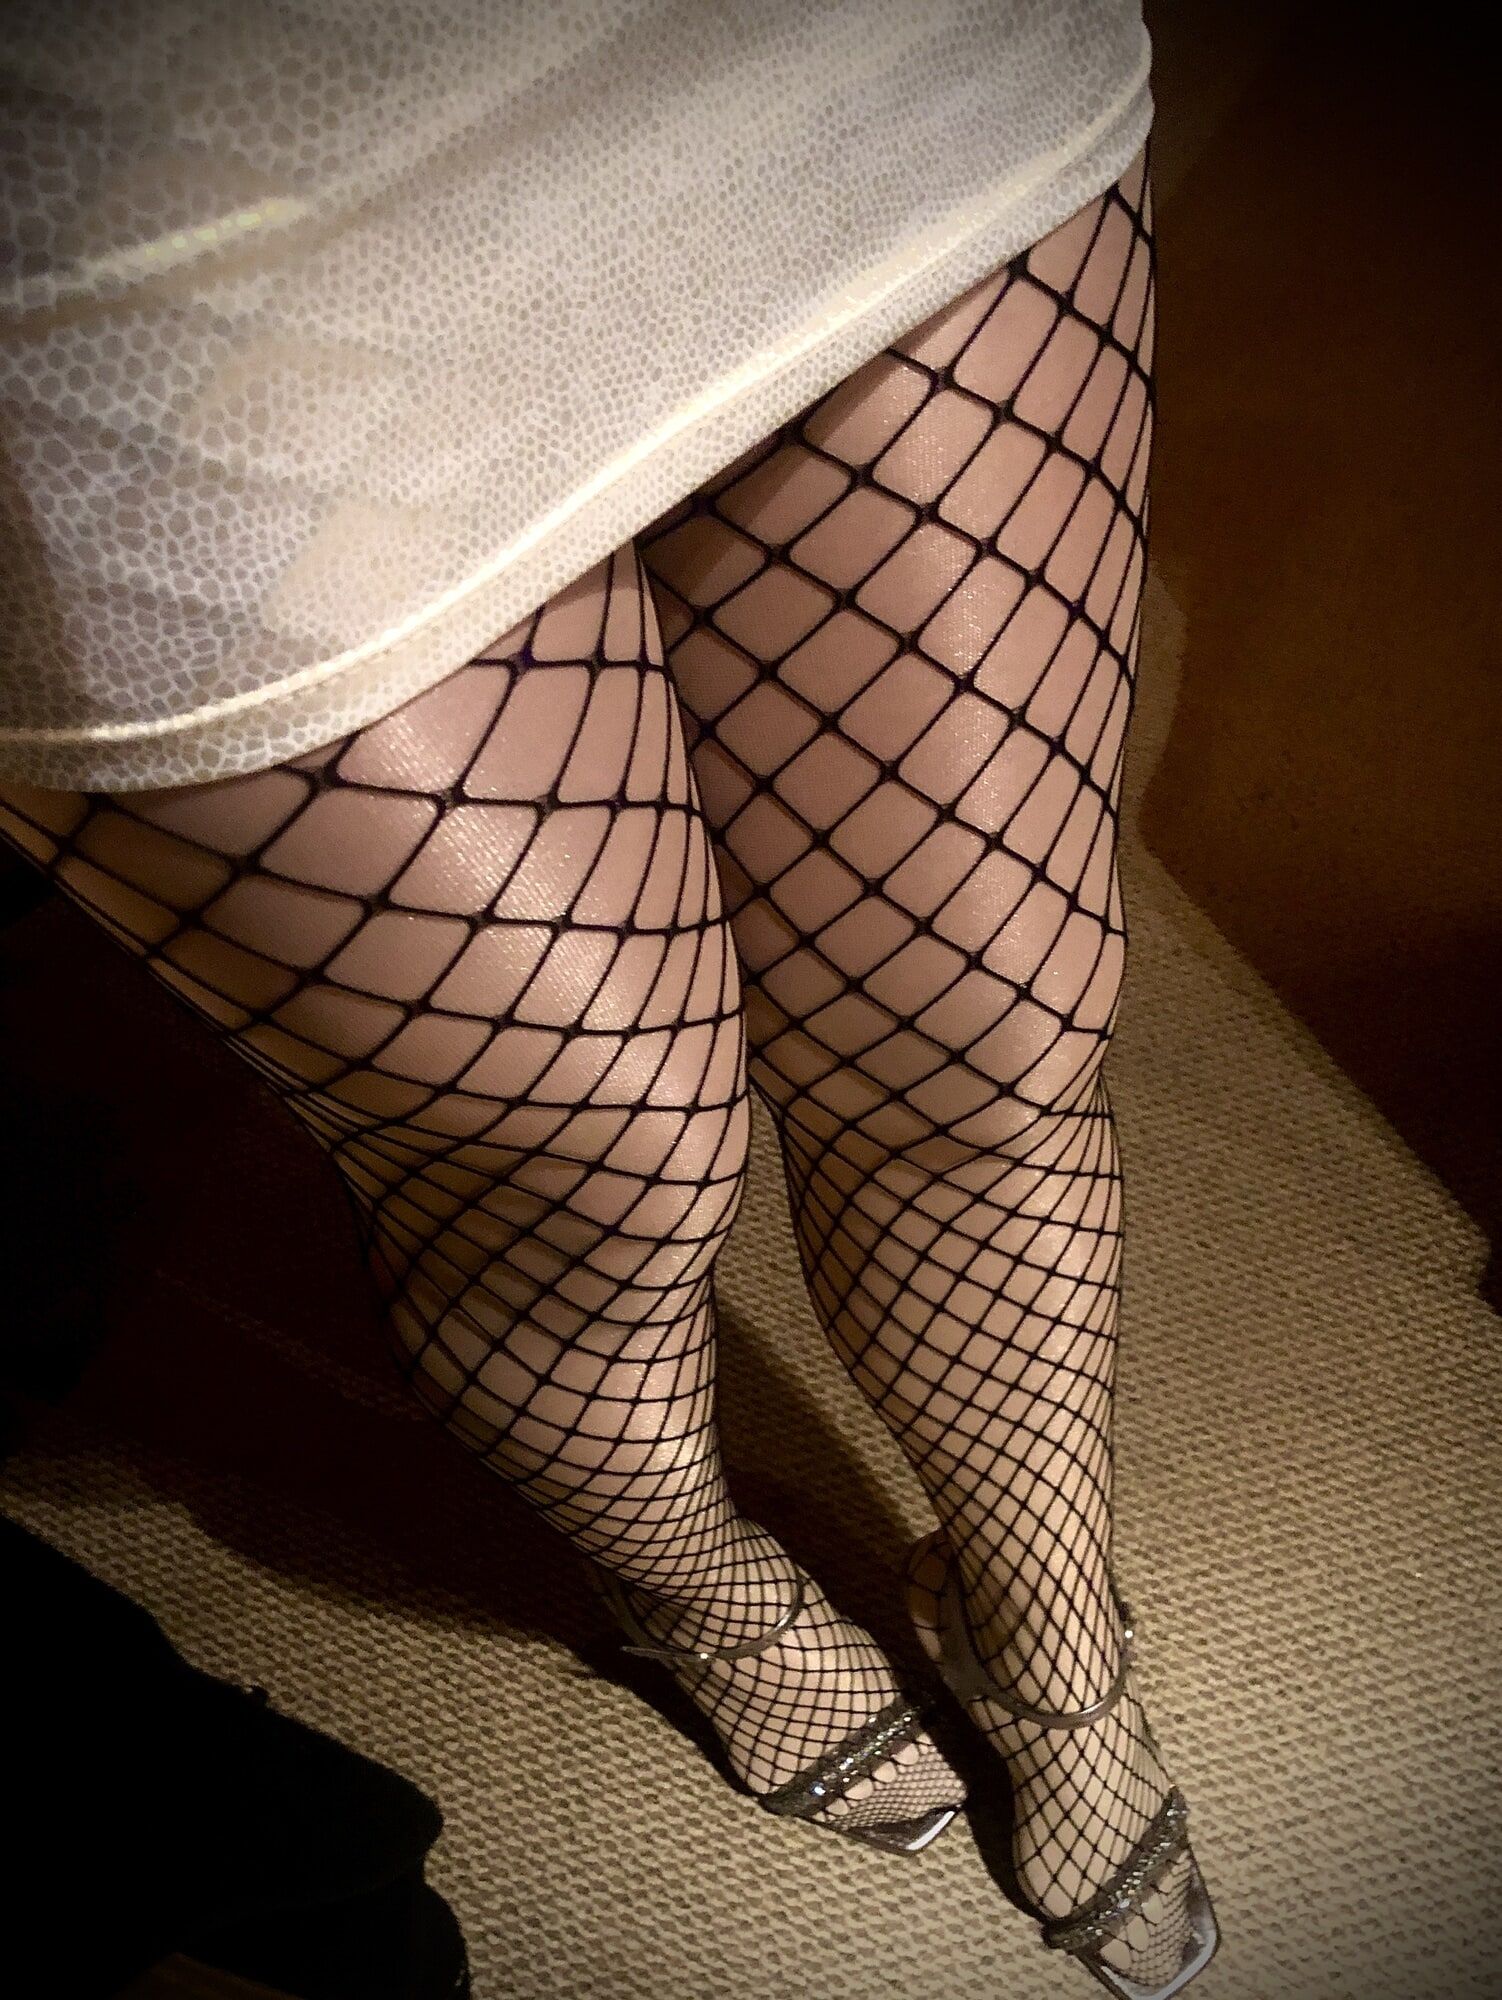 My legs on shiny pantyhose! #32